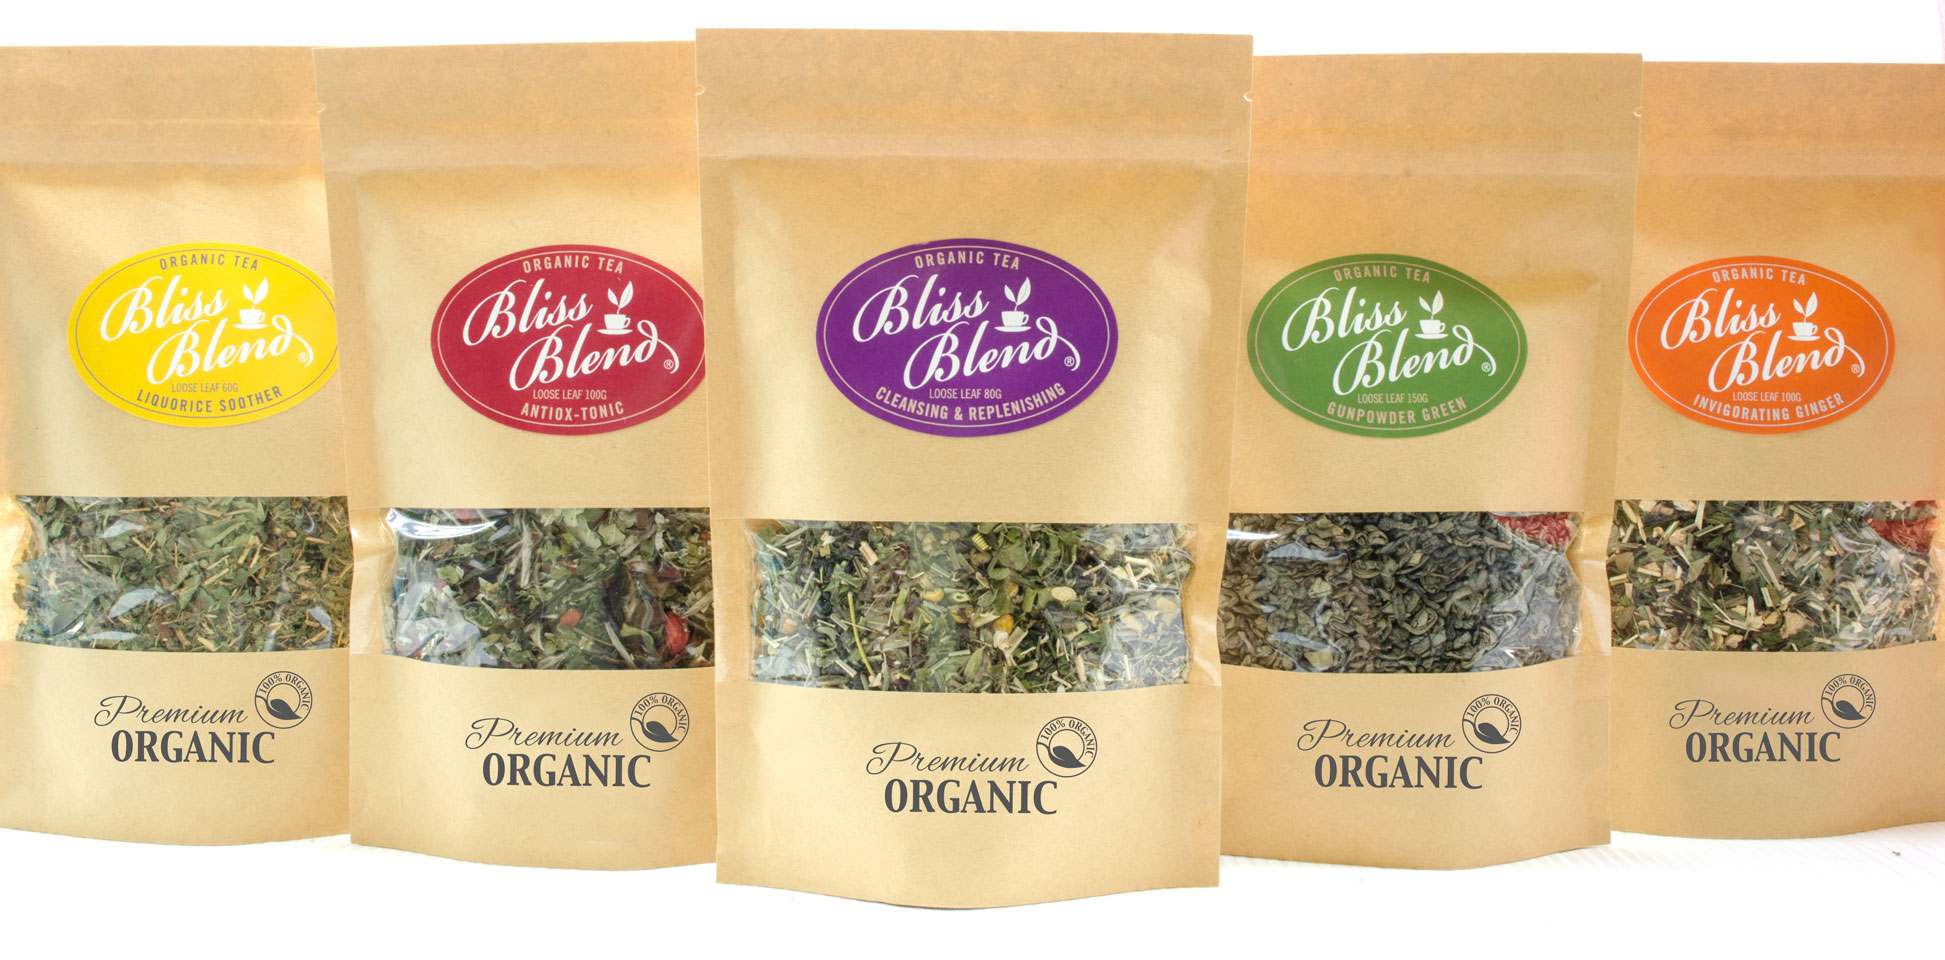 Bliss Blend Organic Tea Product Range Stockists